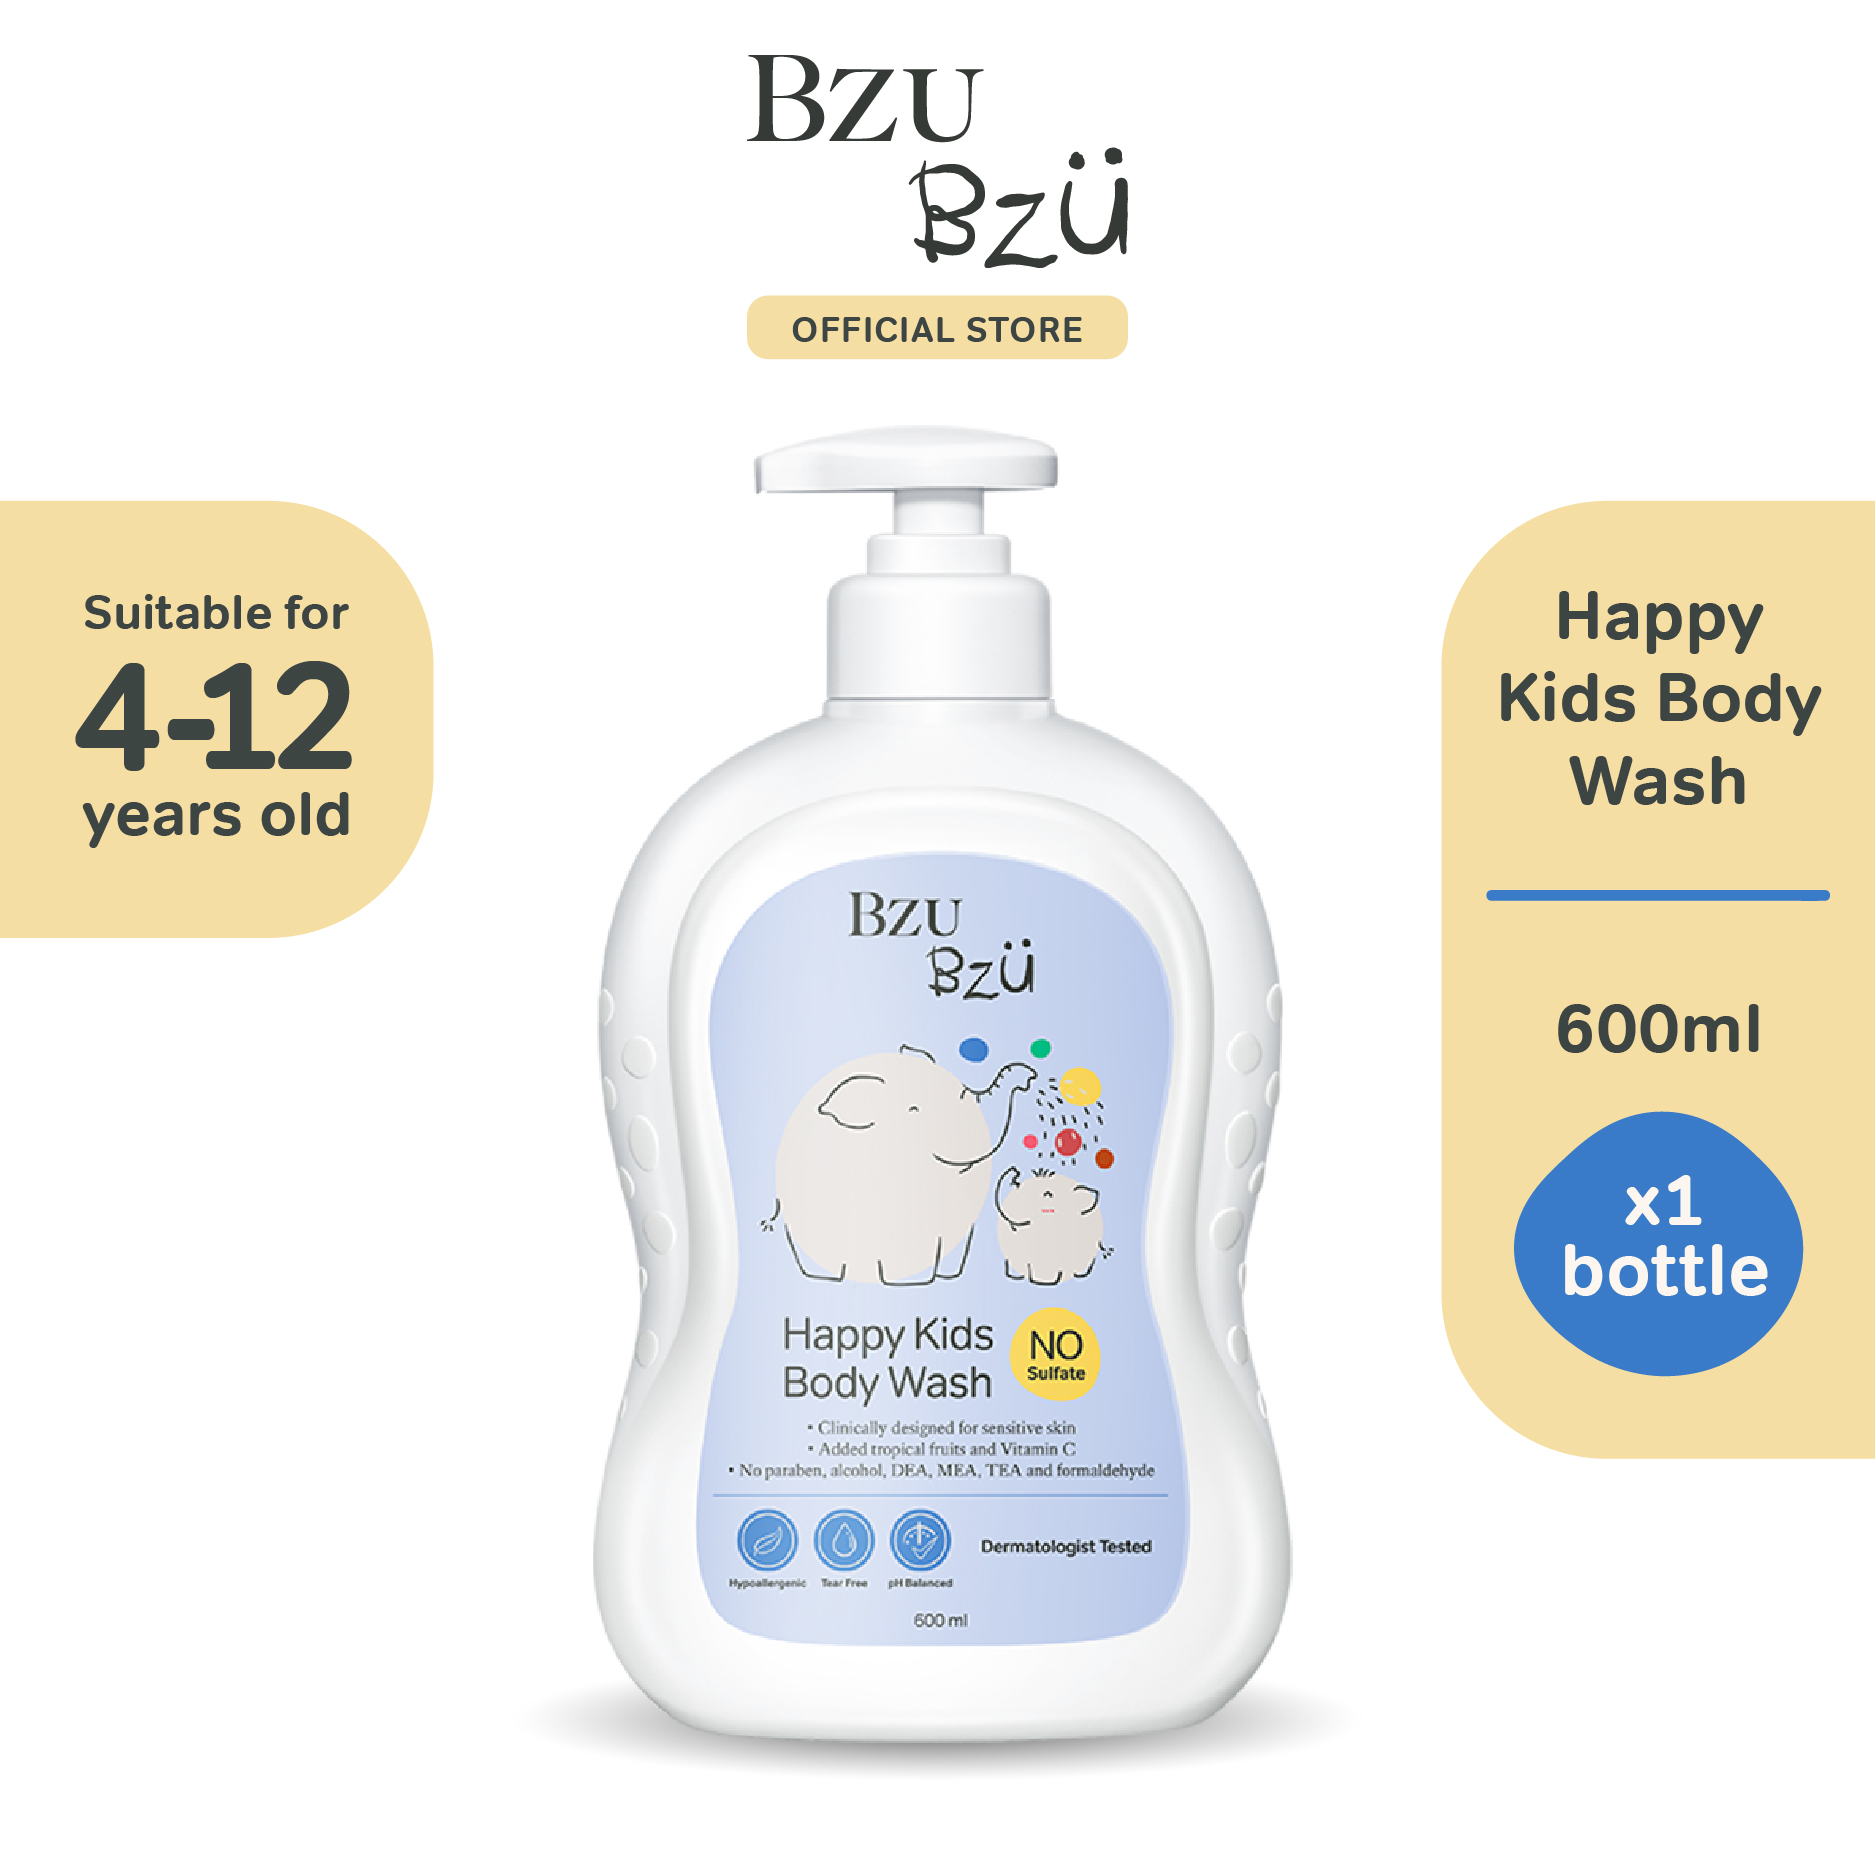 Bzu Bzu Happy Kids Body Wash 600ml + FREE Foldable Wash Basin (worth $10.50!)